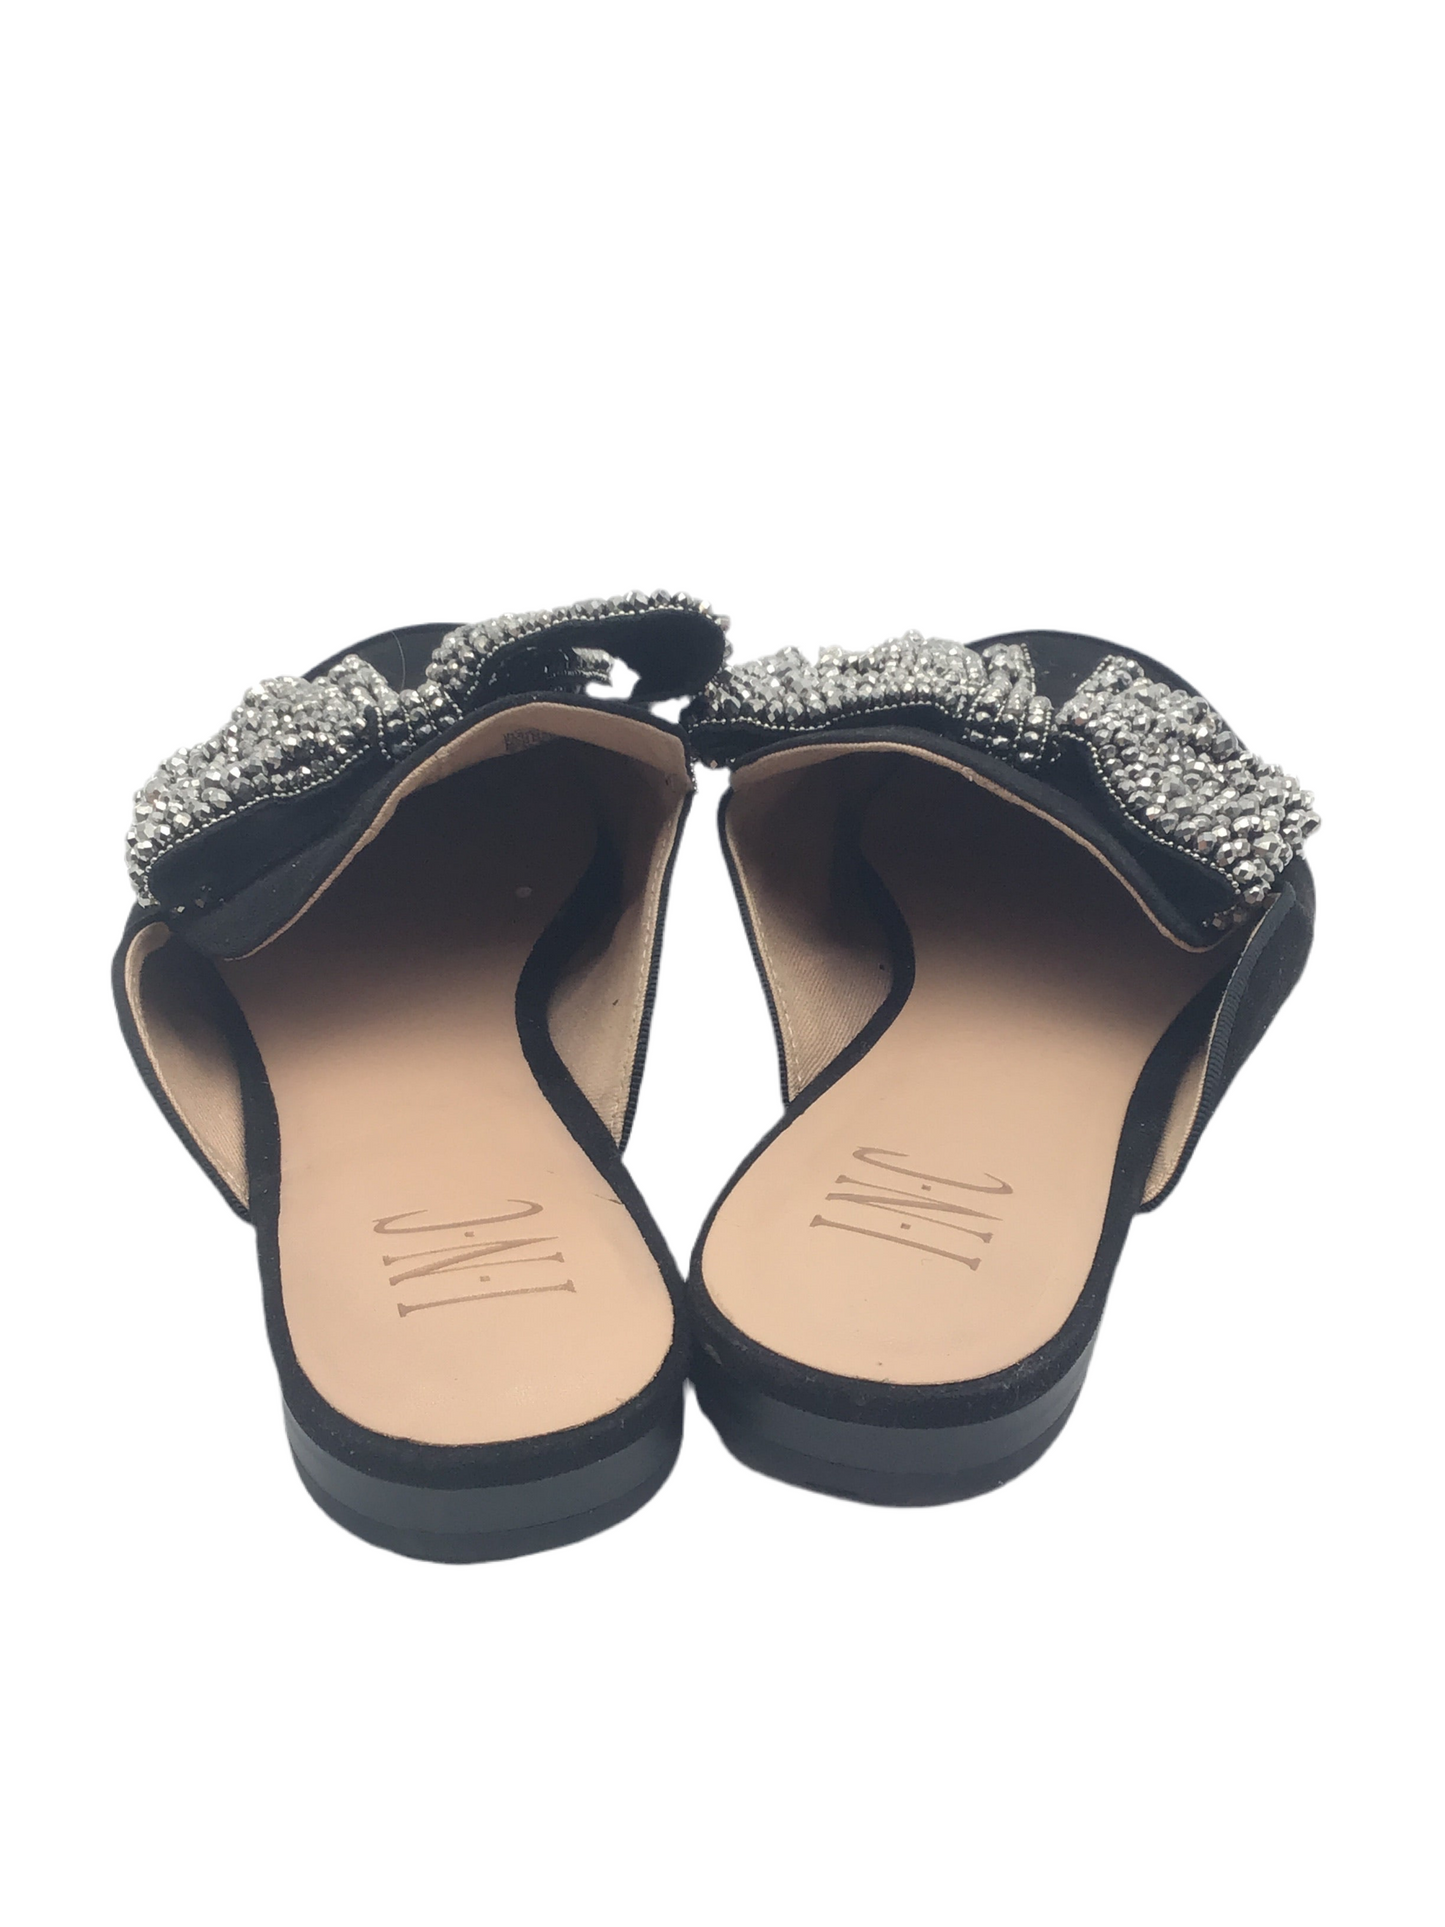 Black & Silver Shoes Flats Inc, Size 7.5